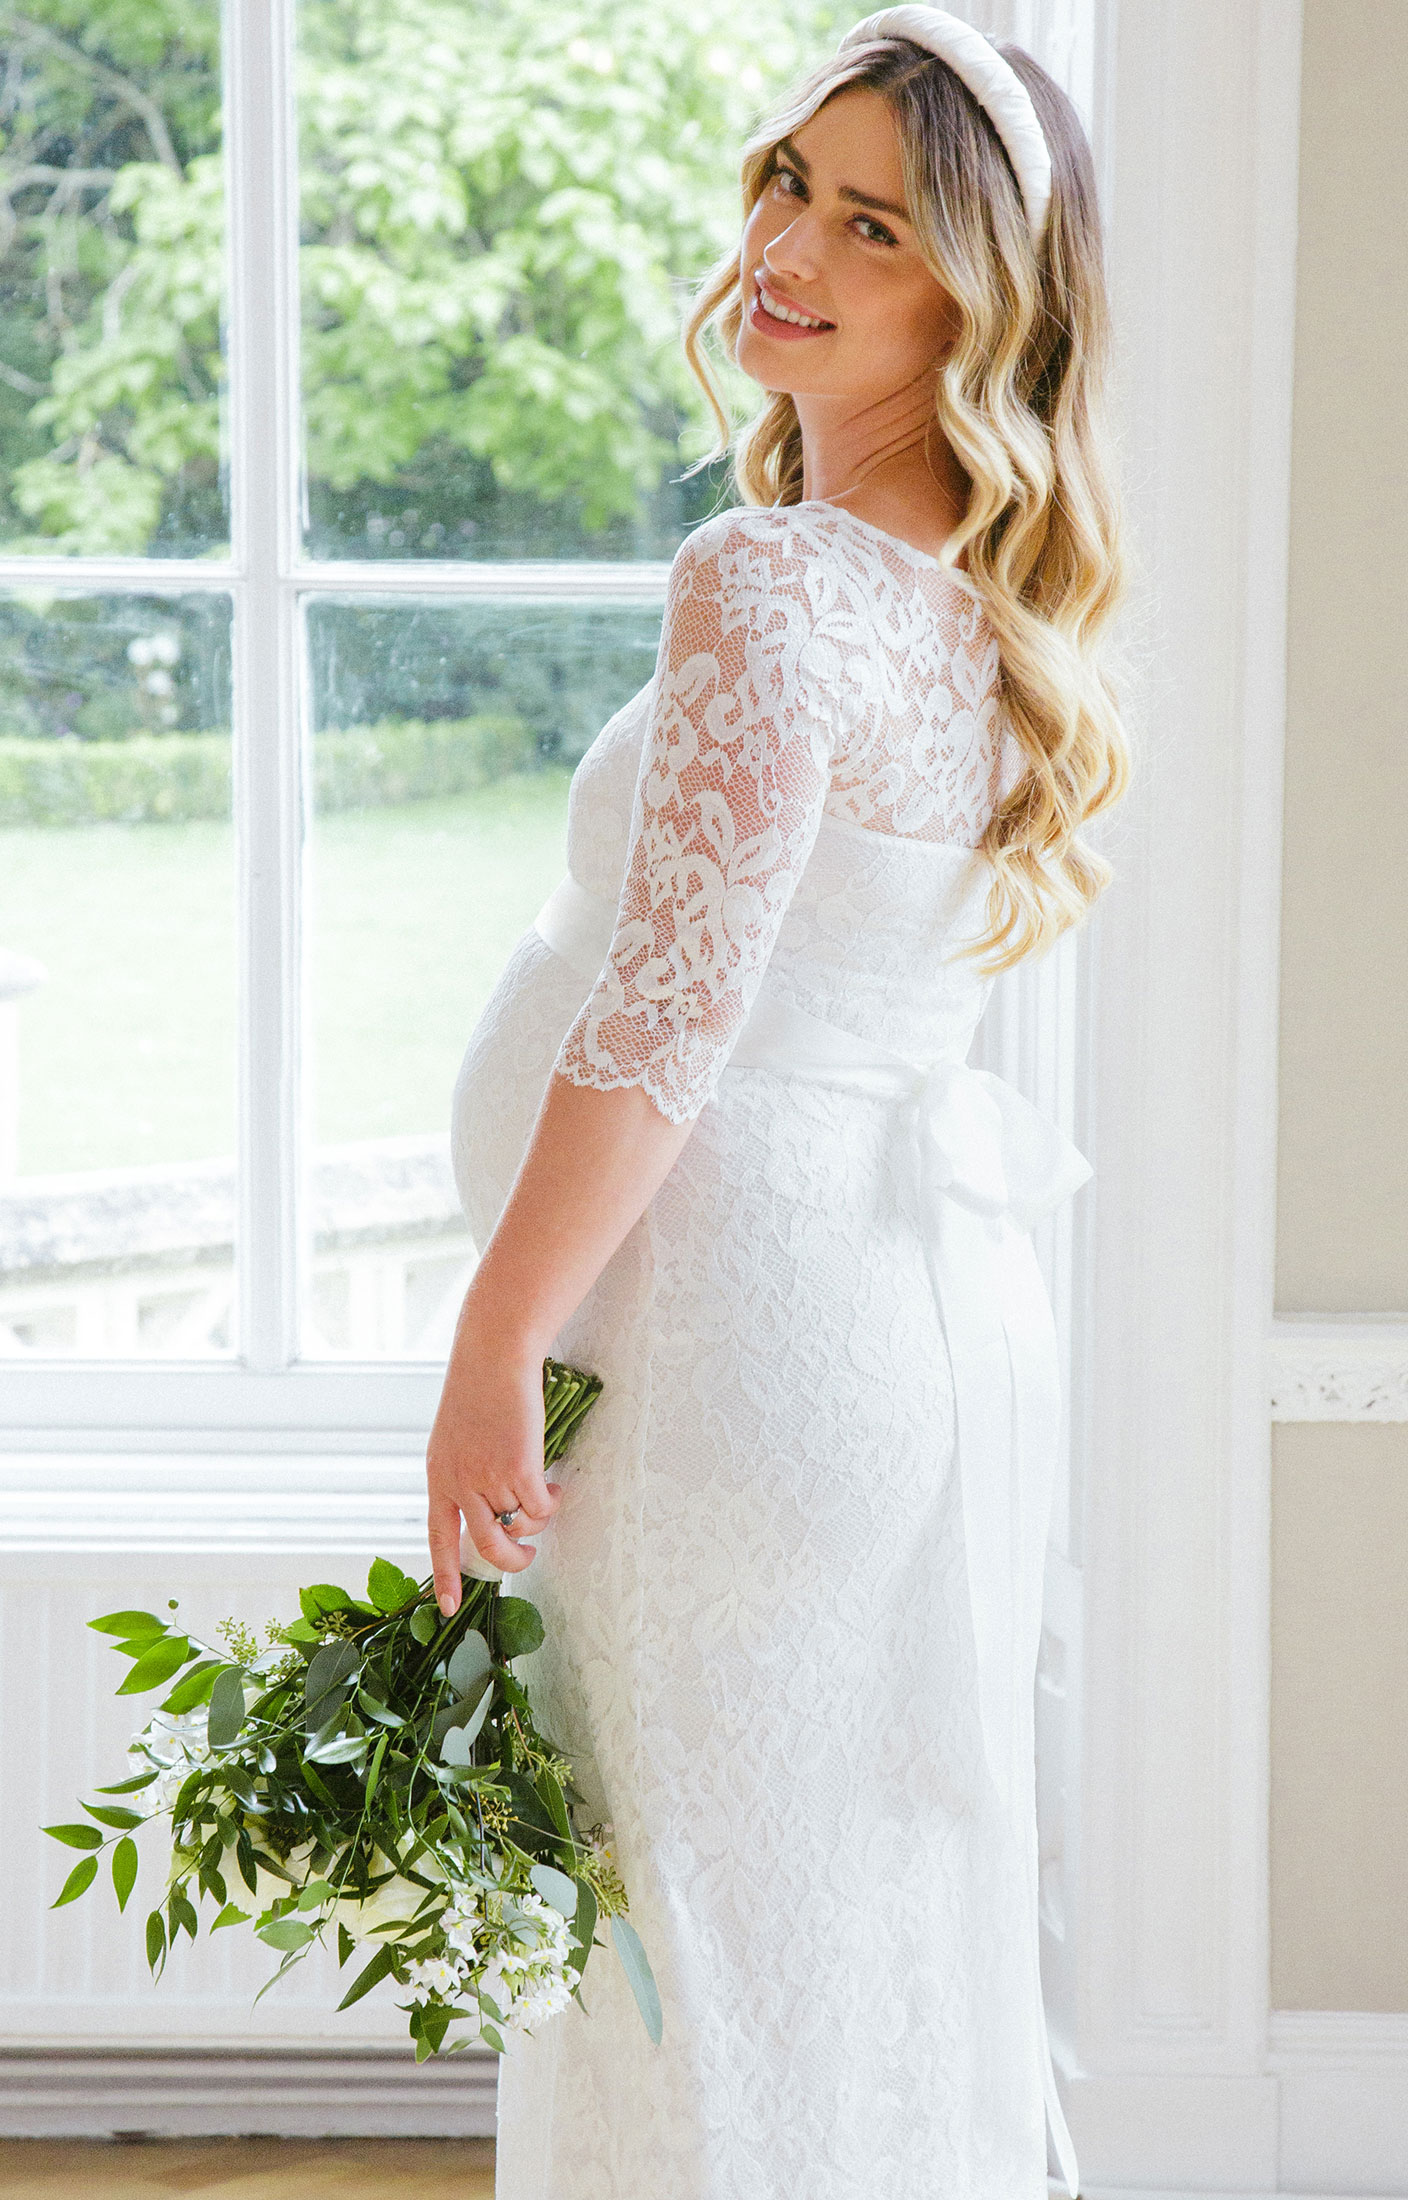 Lace Backless Wedding Dress. Plunge Scallop Front. LOW BACK Wedding Dress.  Simple Elegant Bohemian Wedding Dress. IVORY Lace. -  Canada